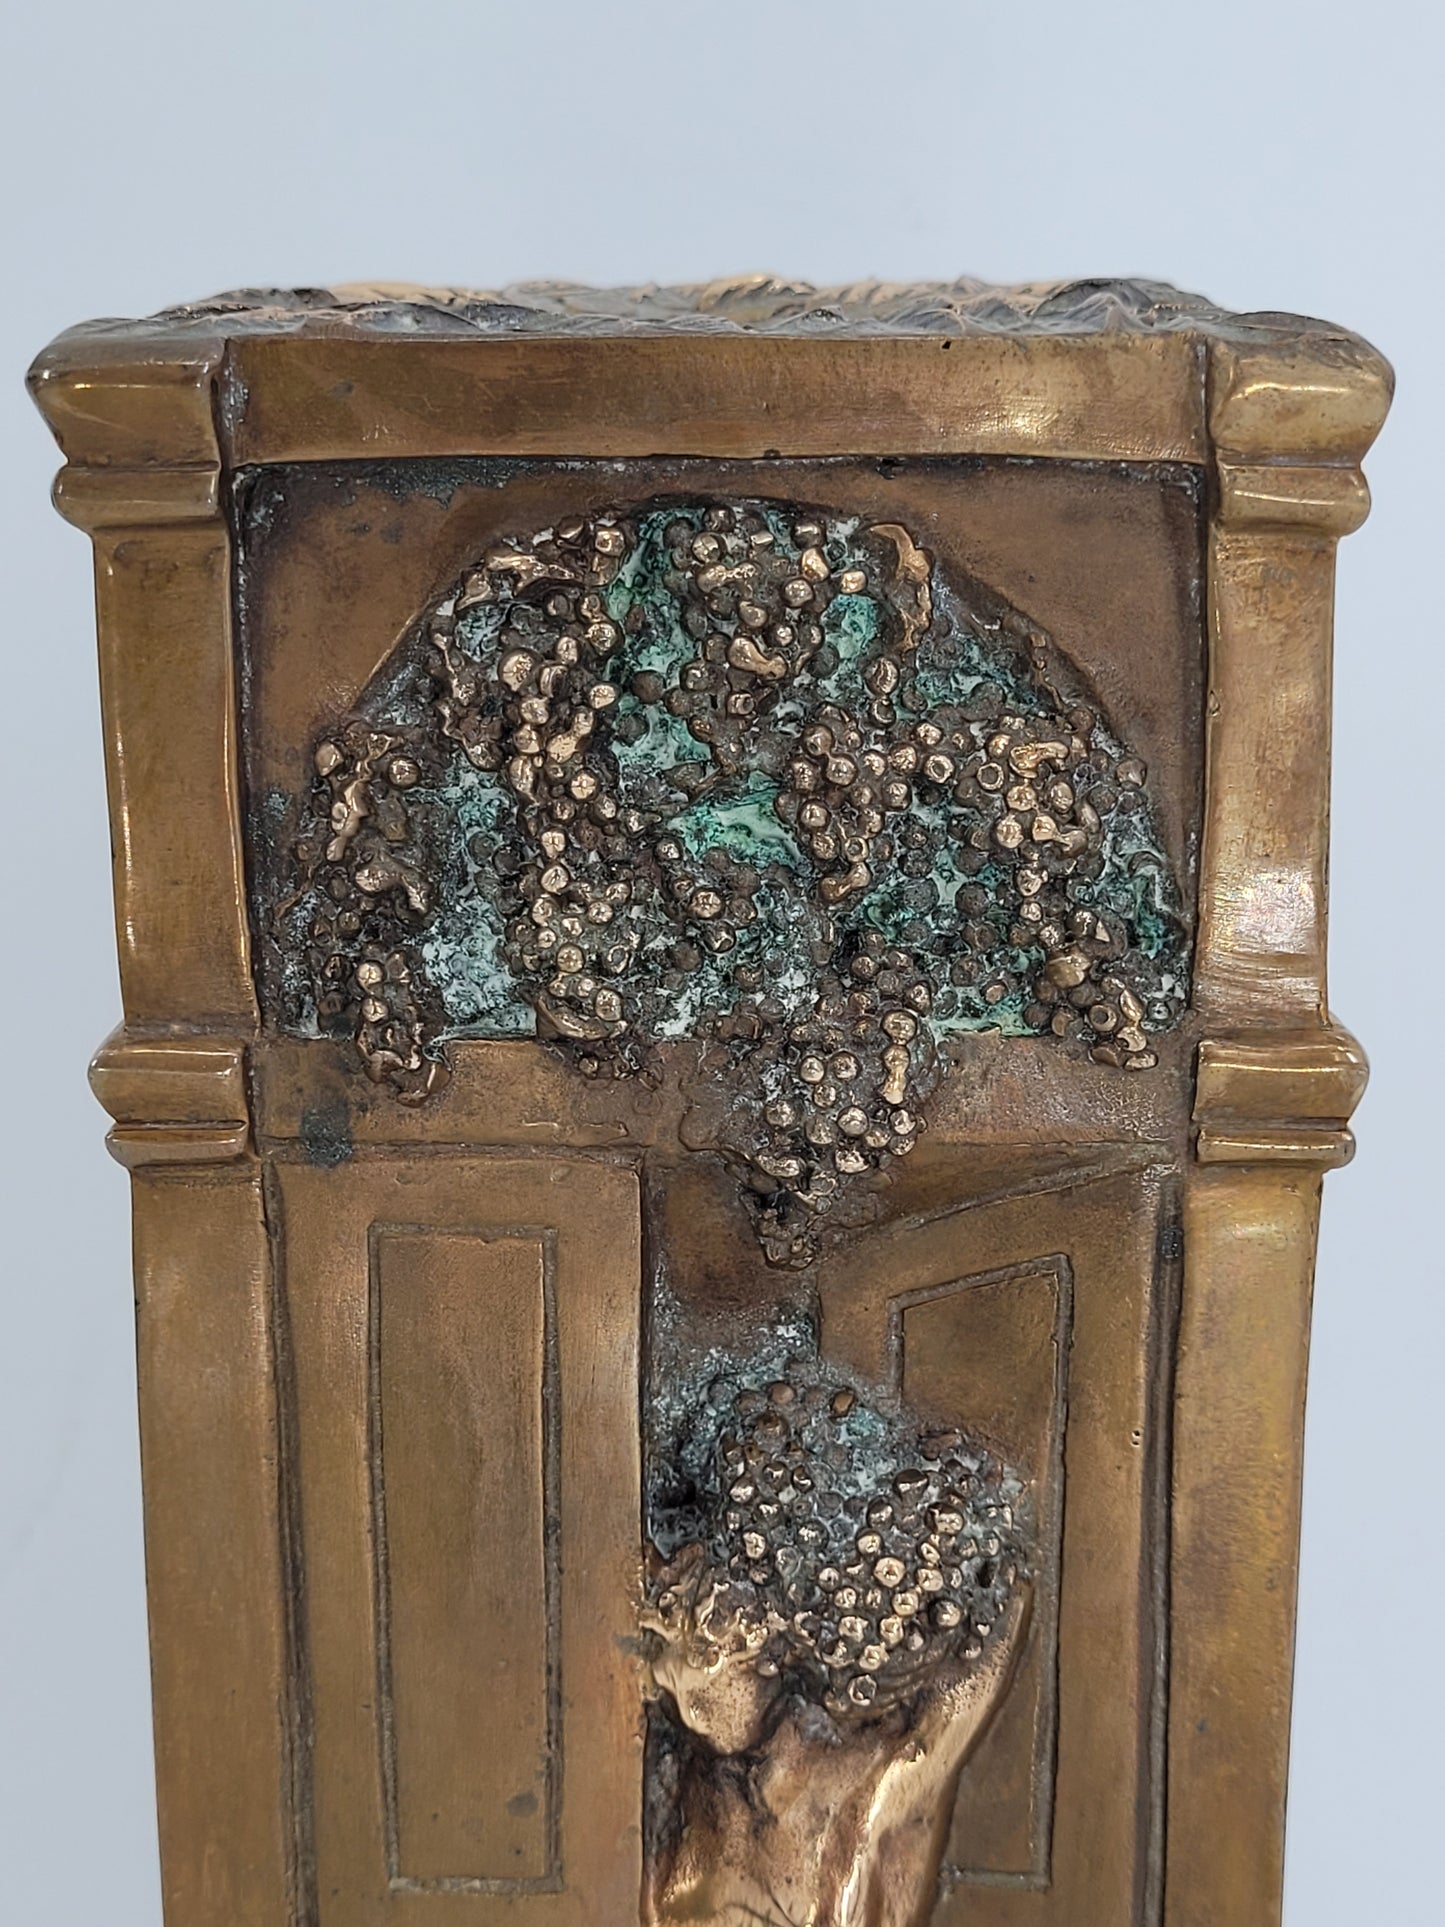 Große Art Nouveau Jugendstil Bronze Blumenvase Limitiert 85/500